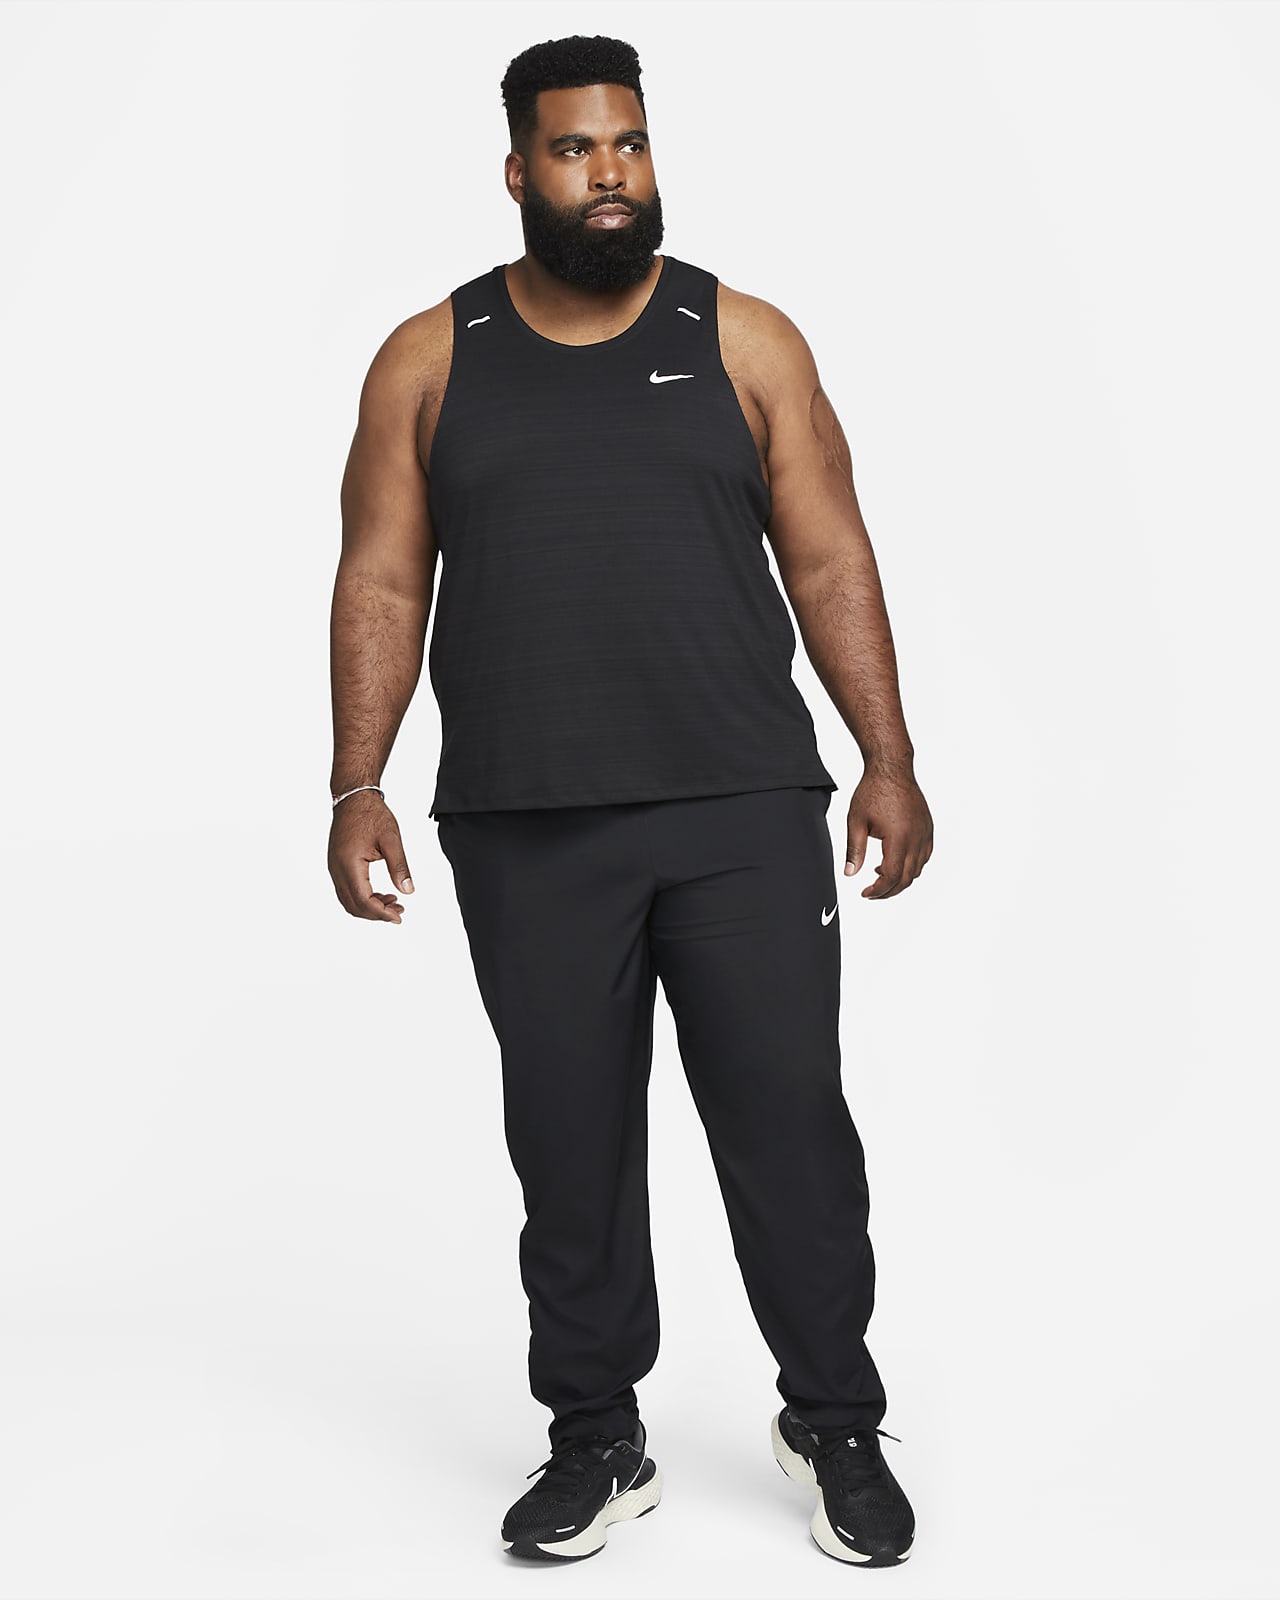 Women's Black Tank Tops & Sleeveless Shirts. Nike CA